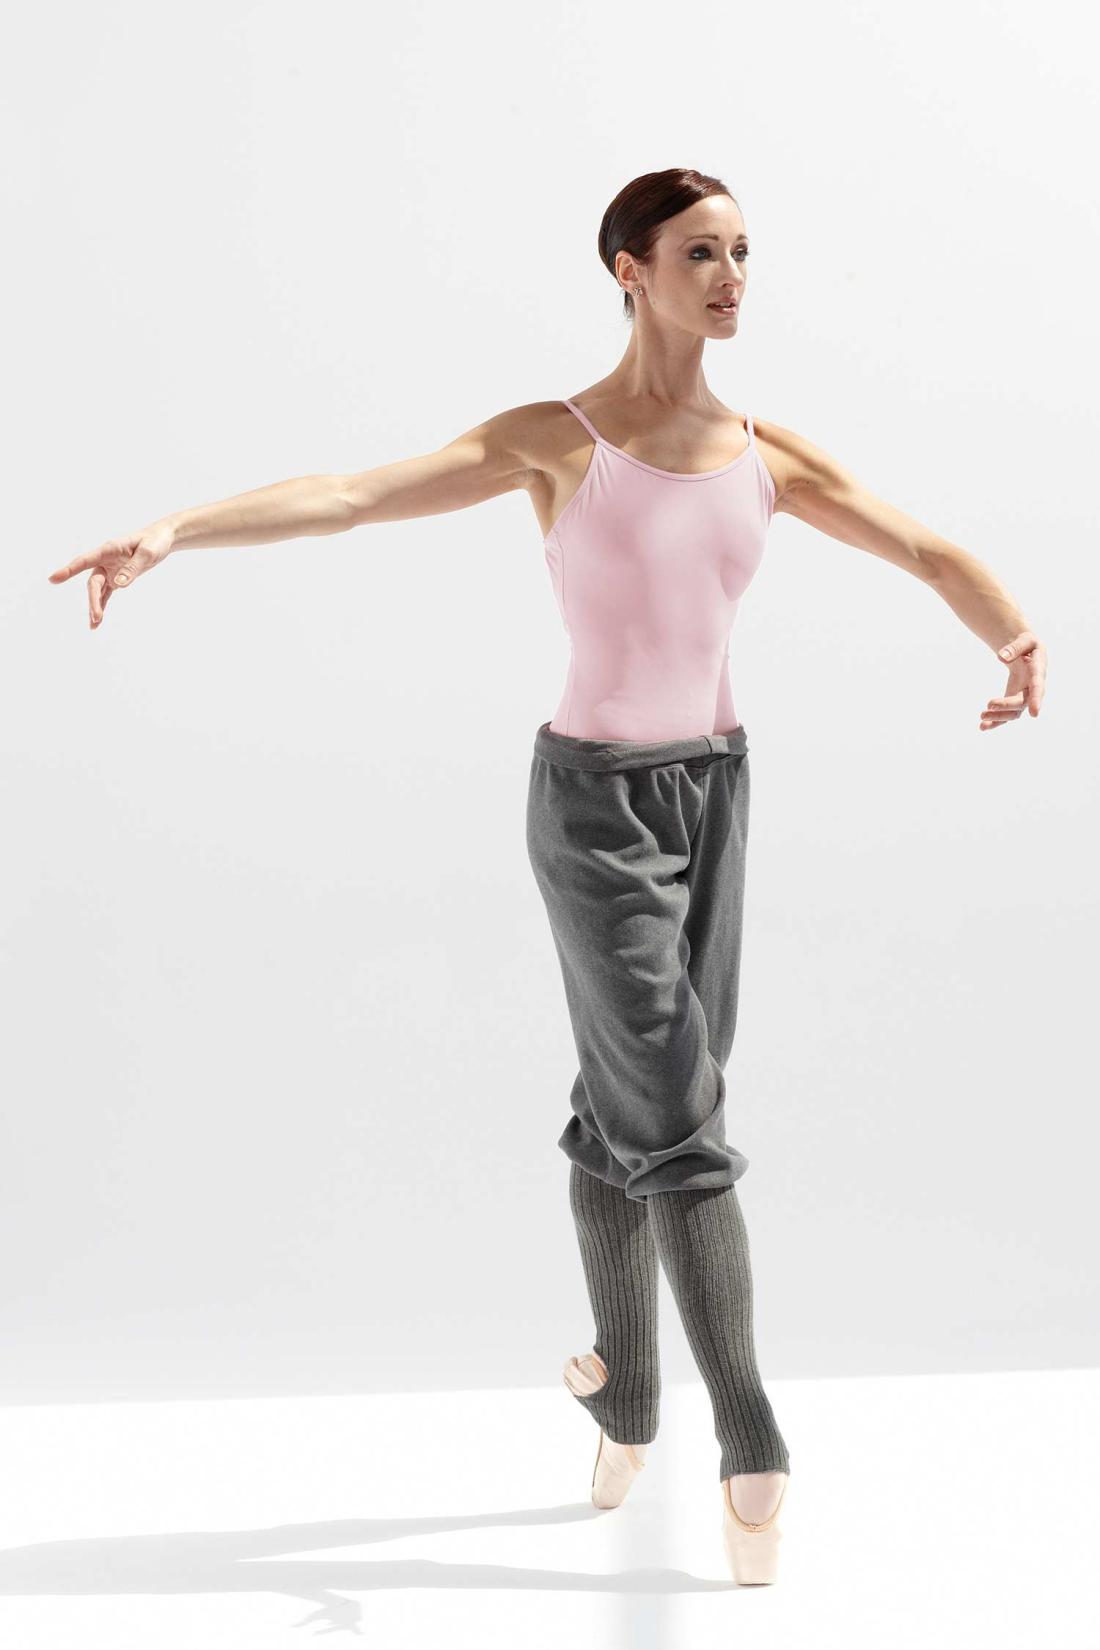 Warm up Intermezzo Cotton Pants with ankle legwarmers ballet dancewear